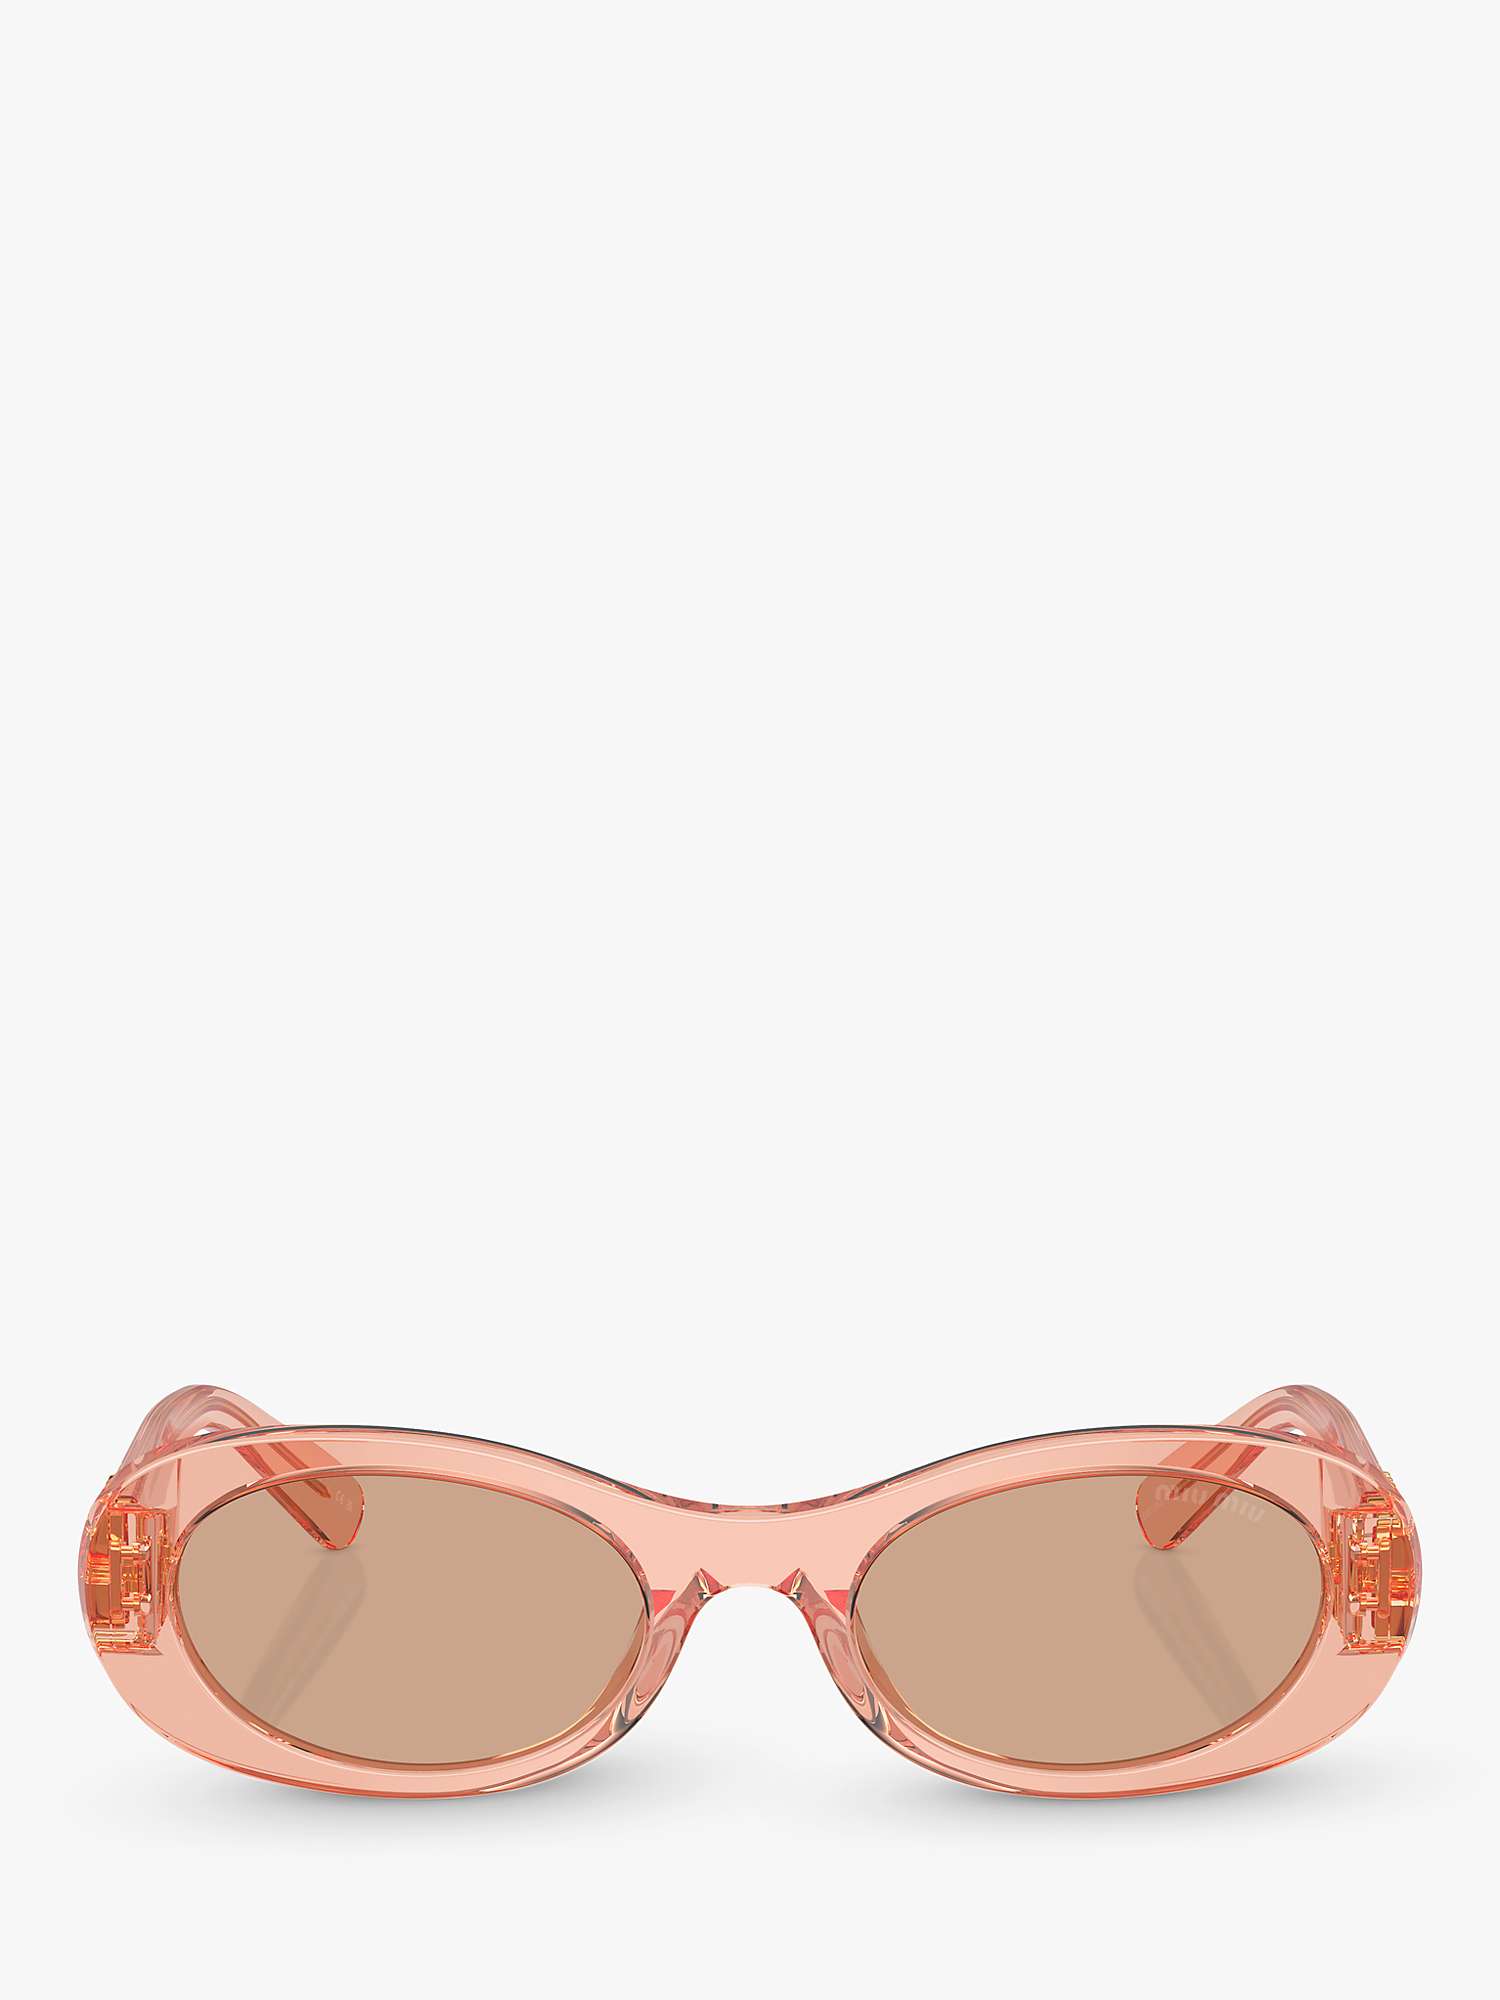 Buy Miu Miu MU 06ZS Women's Oval Sunglasses, Transparent Noisette/Brown Online at johnlewis.com